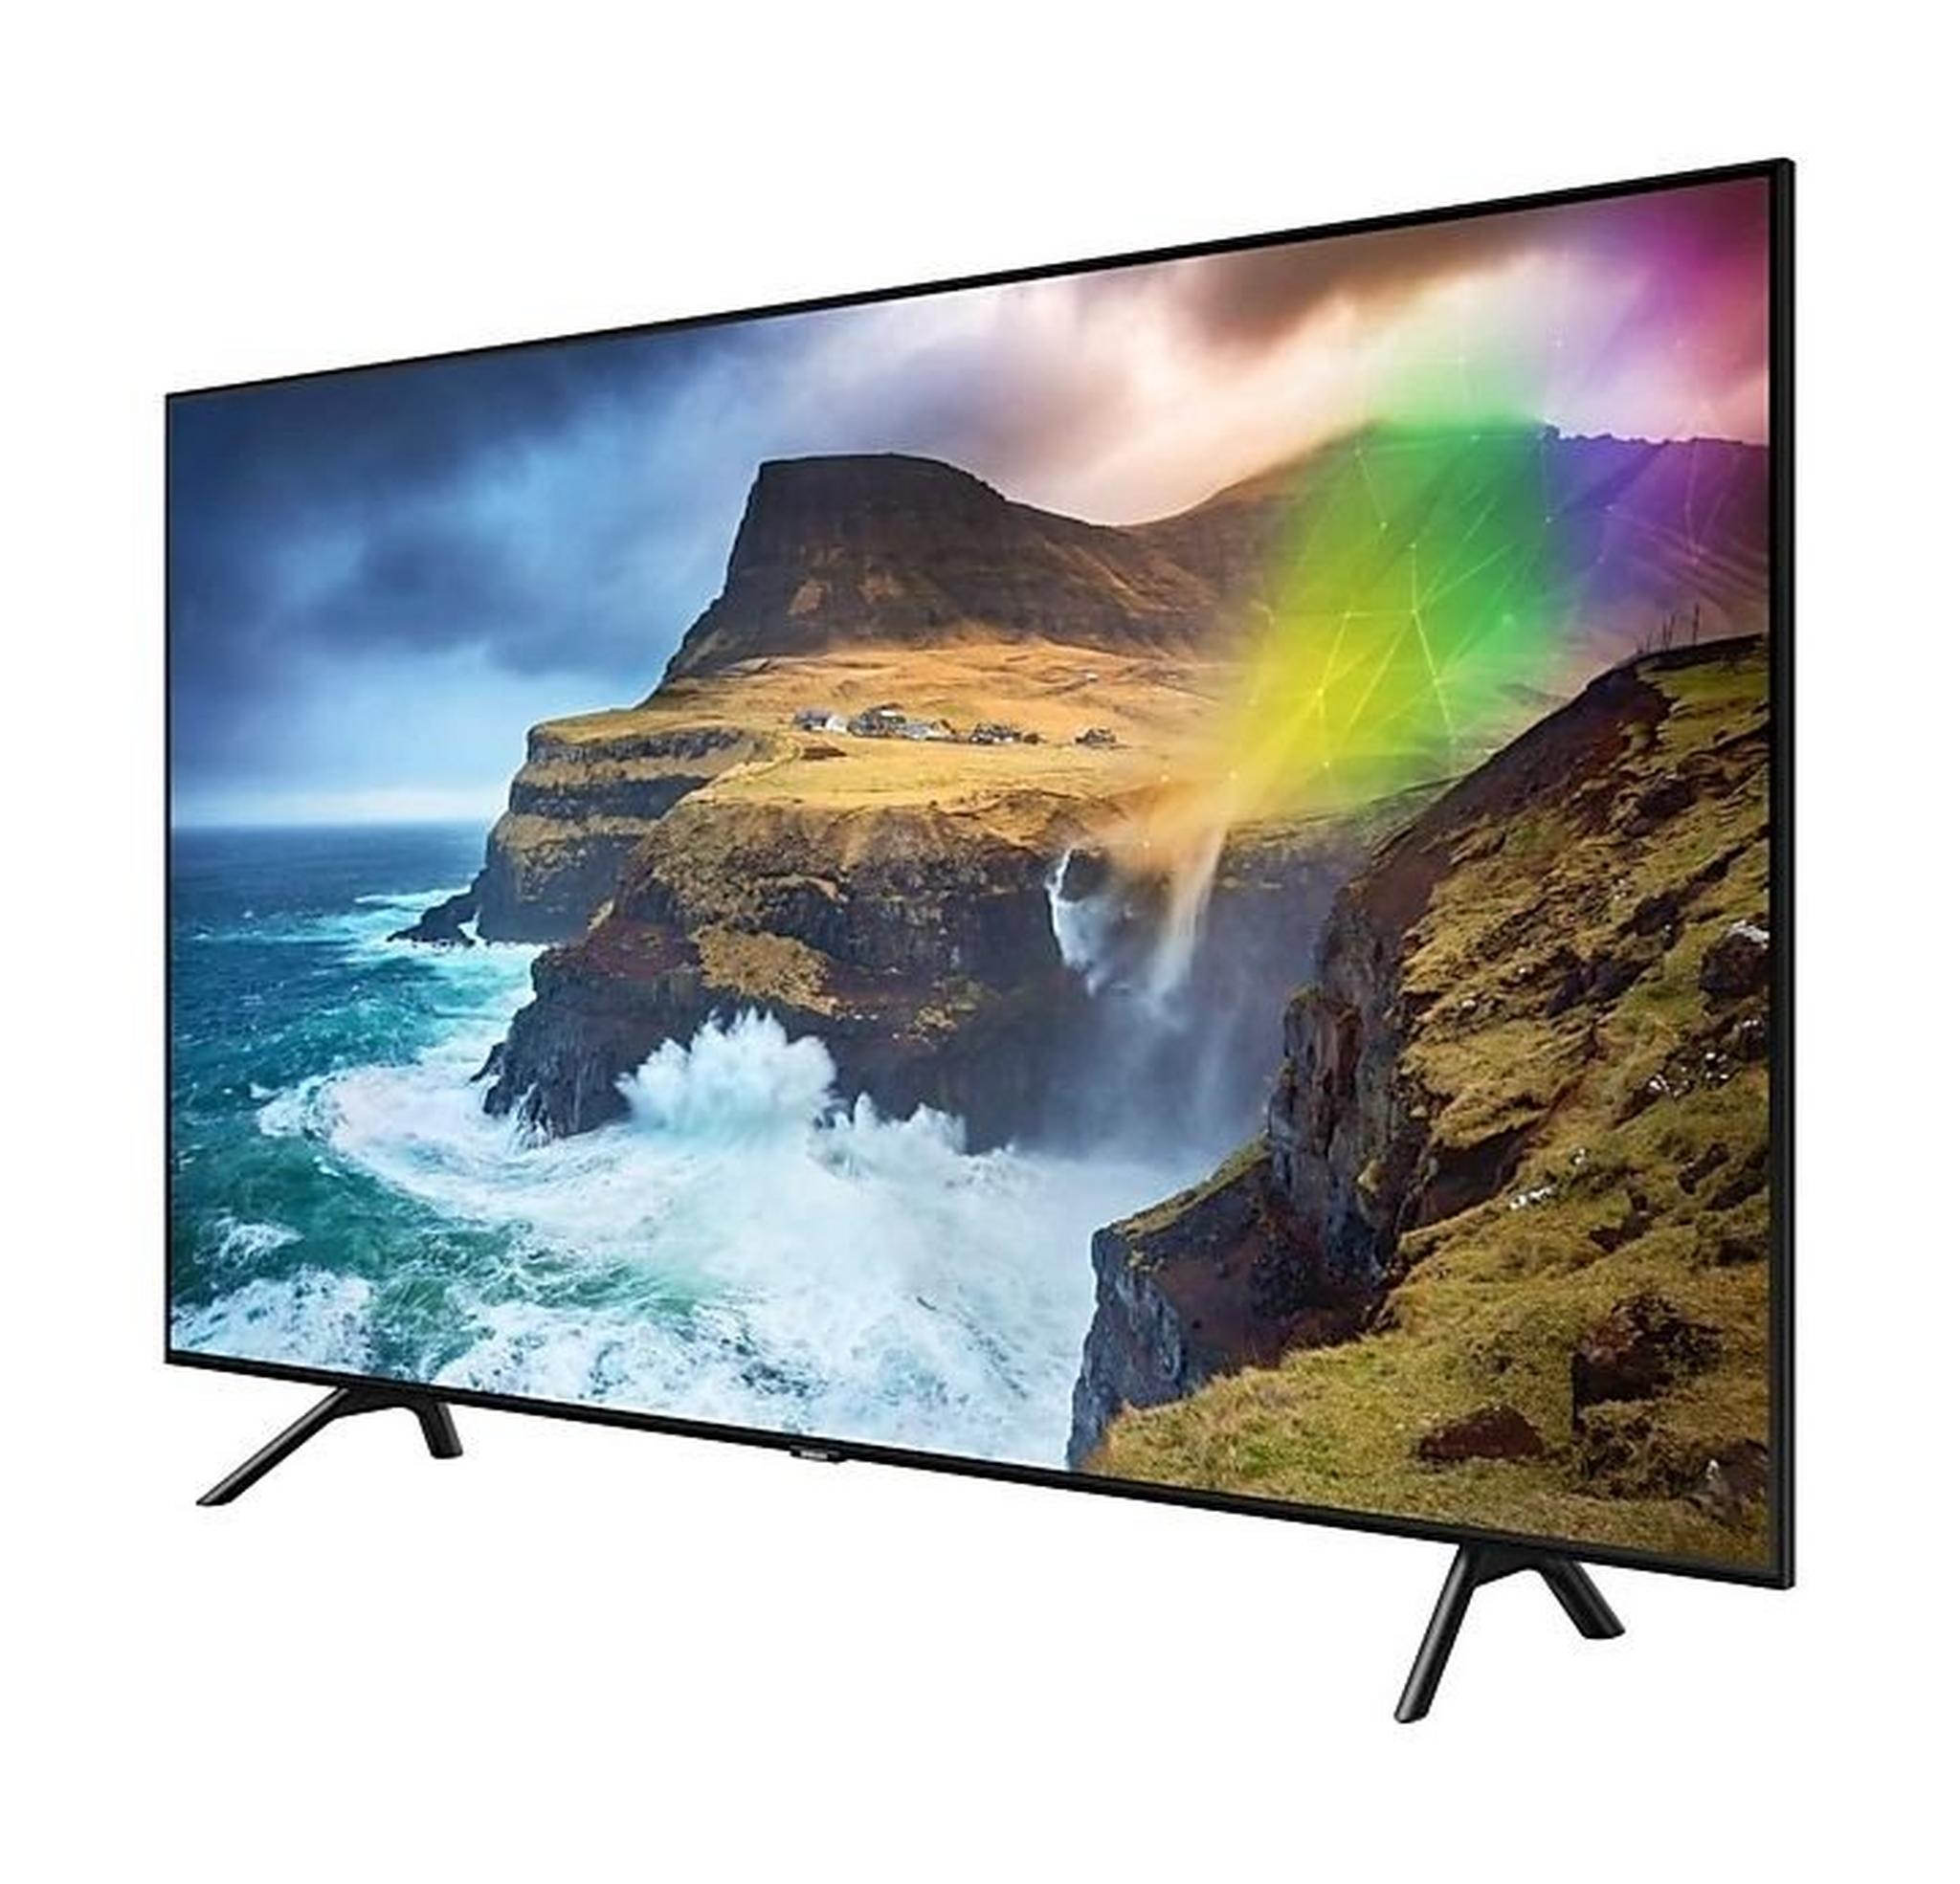 Samsung TV Q70R 55 inch Ultra HD Smart LED - QA55Q70R